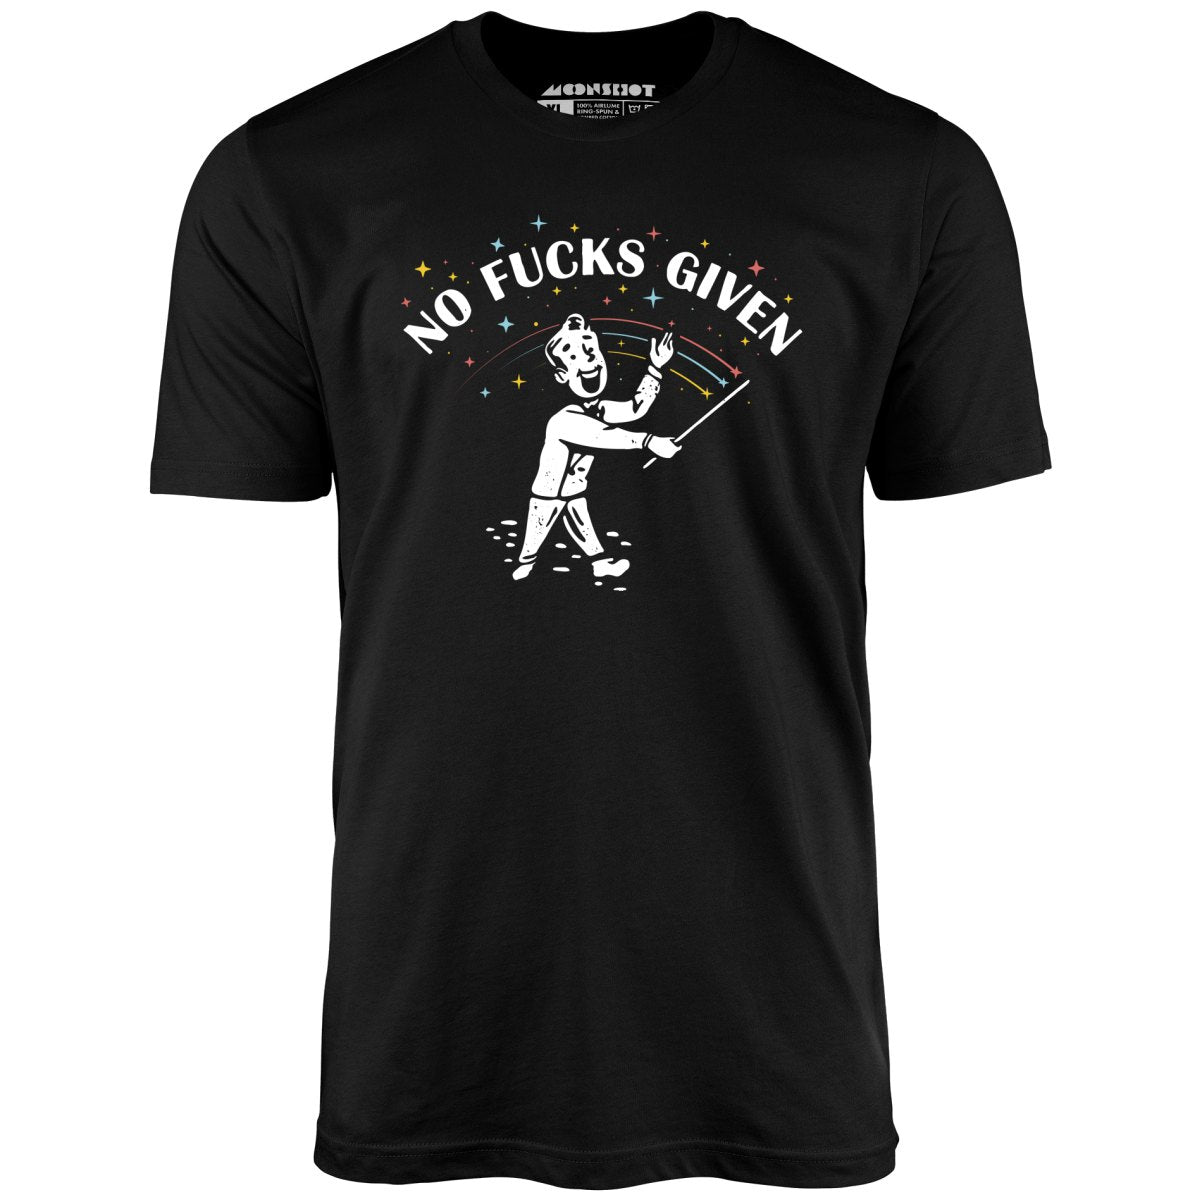 No Fucks Given - Unisex T-Shirt